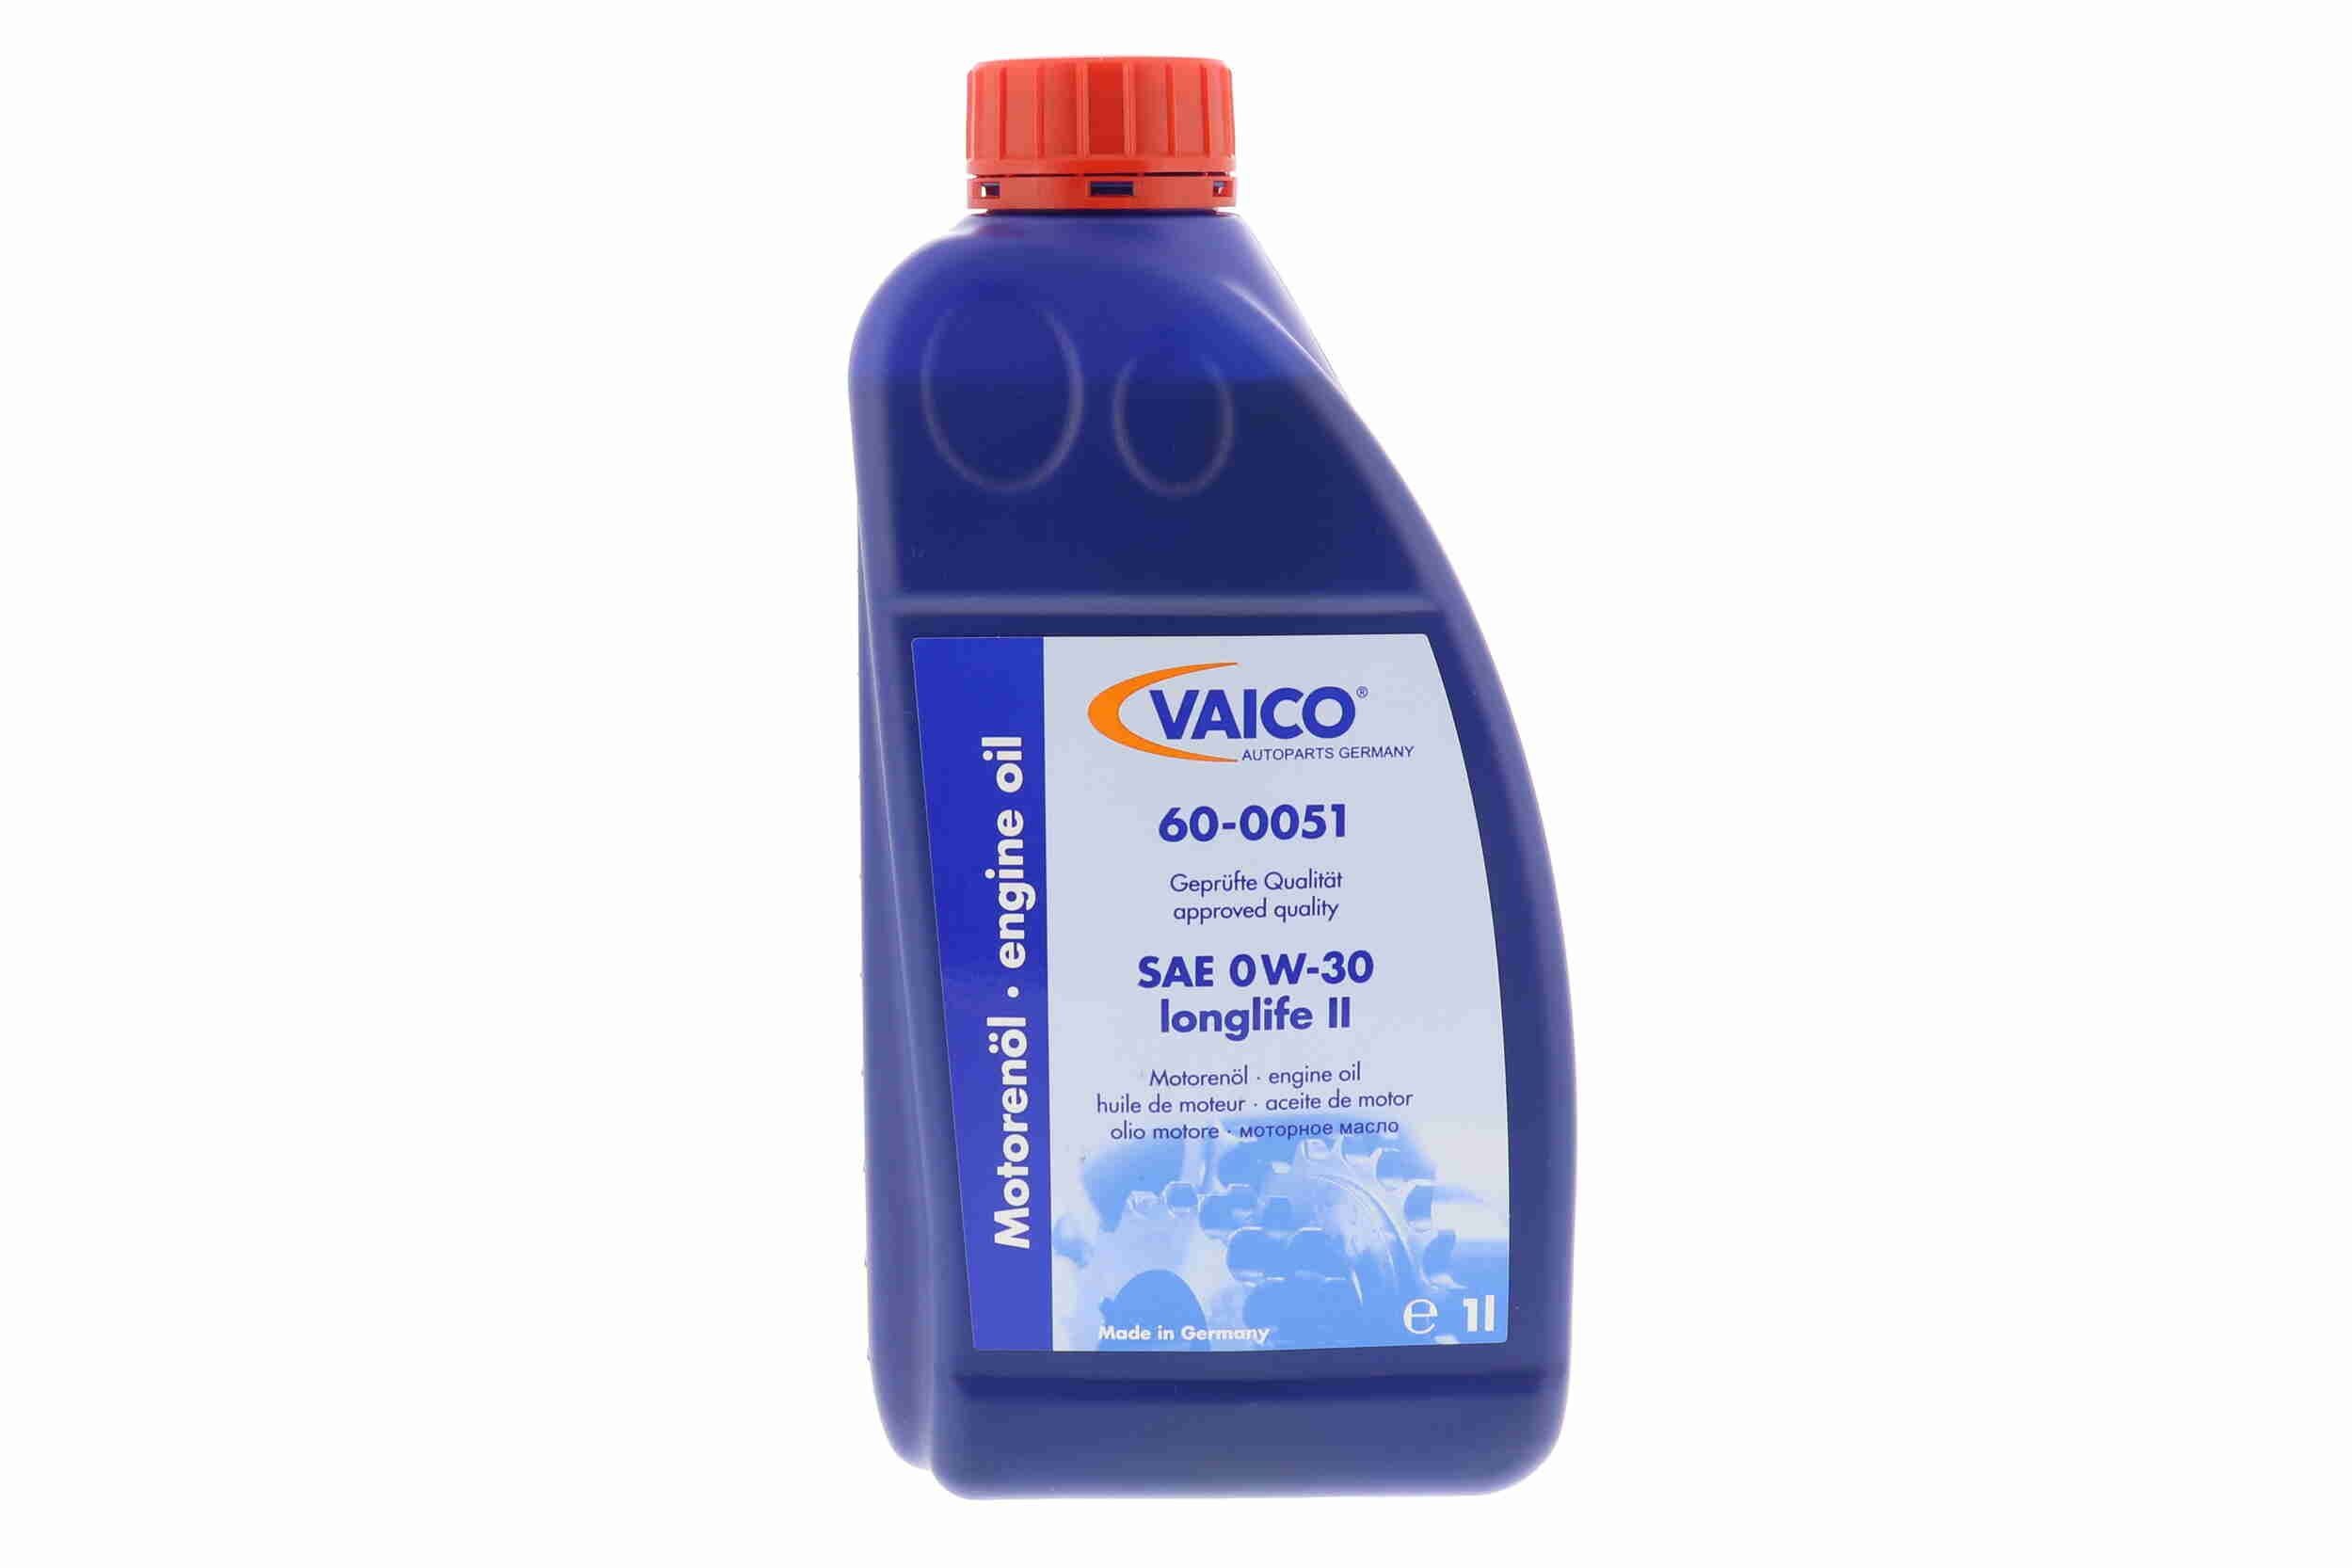 Automobile oil VW 503.00 VAICO petrol - V60-0051